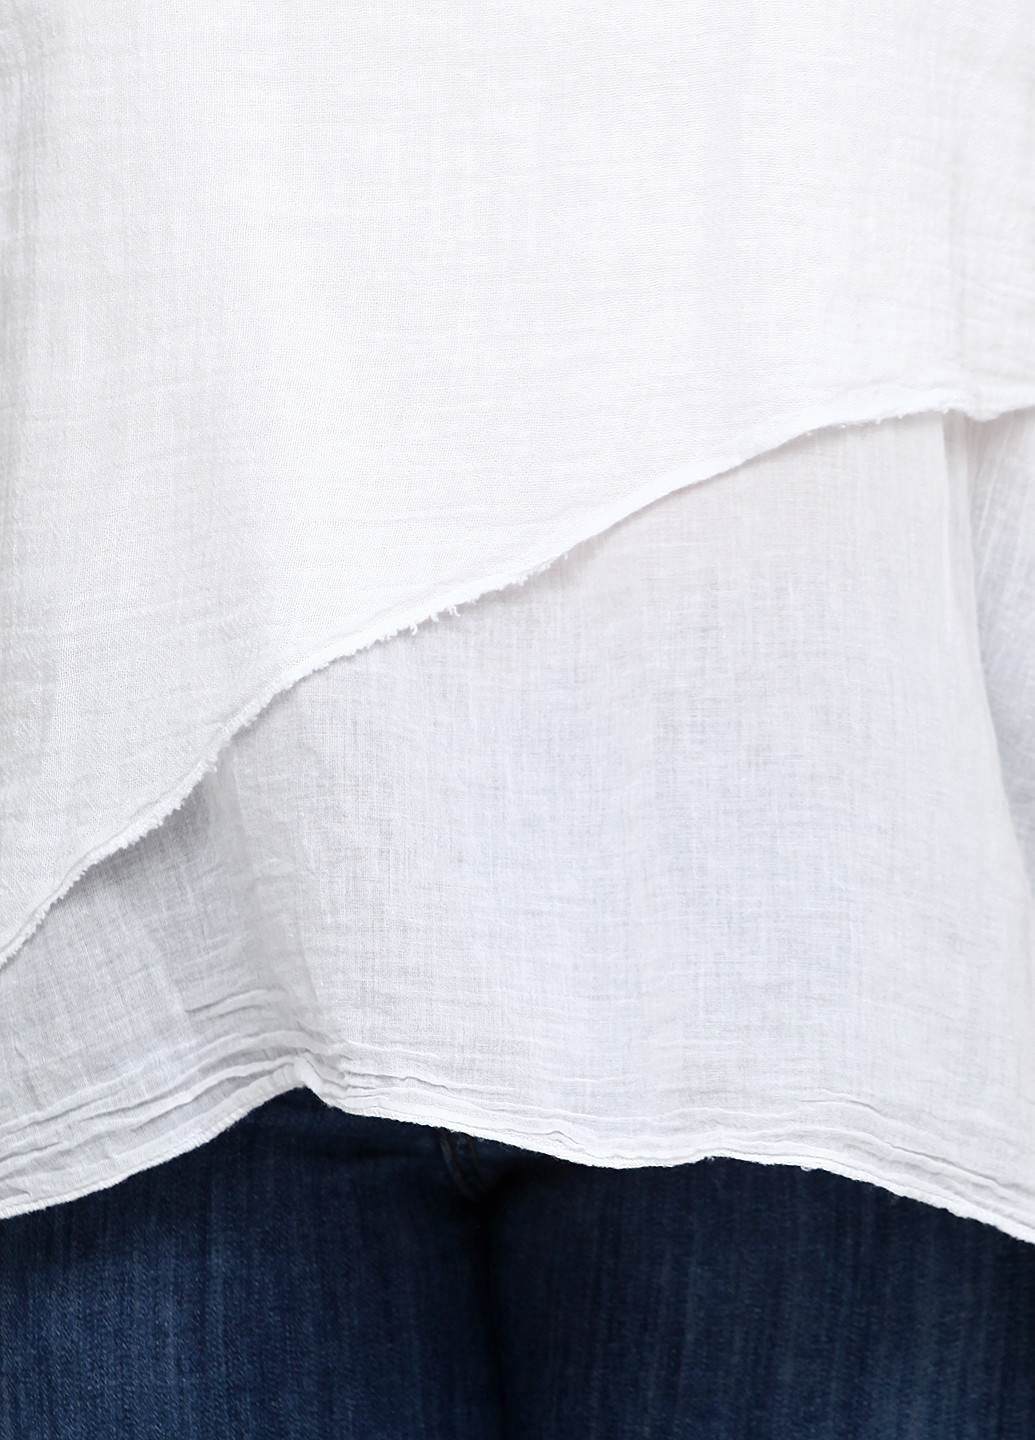 Белый демисезонный комплект (блуза, майка) Made in Italy